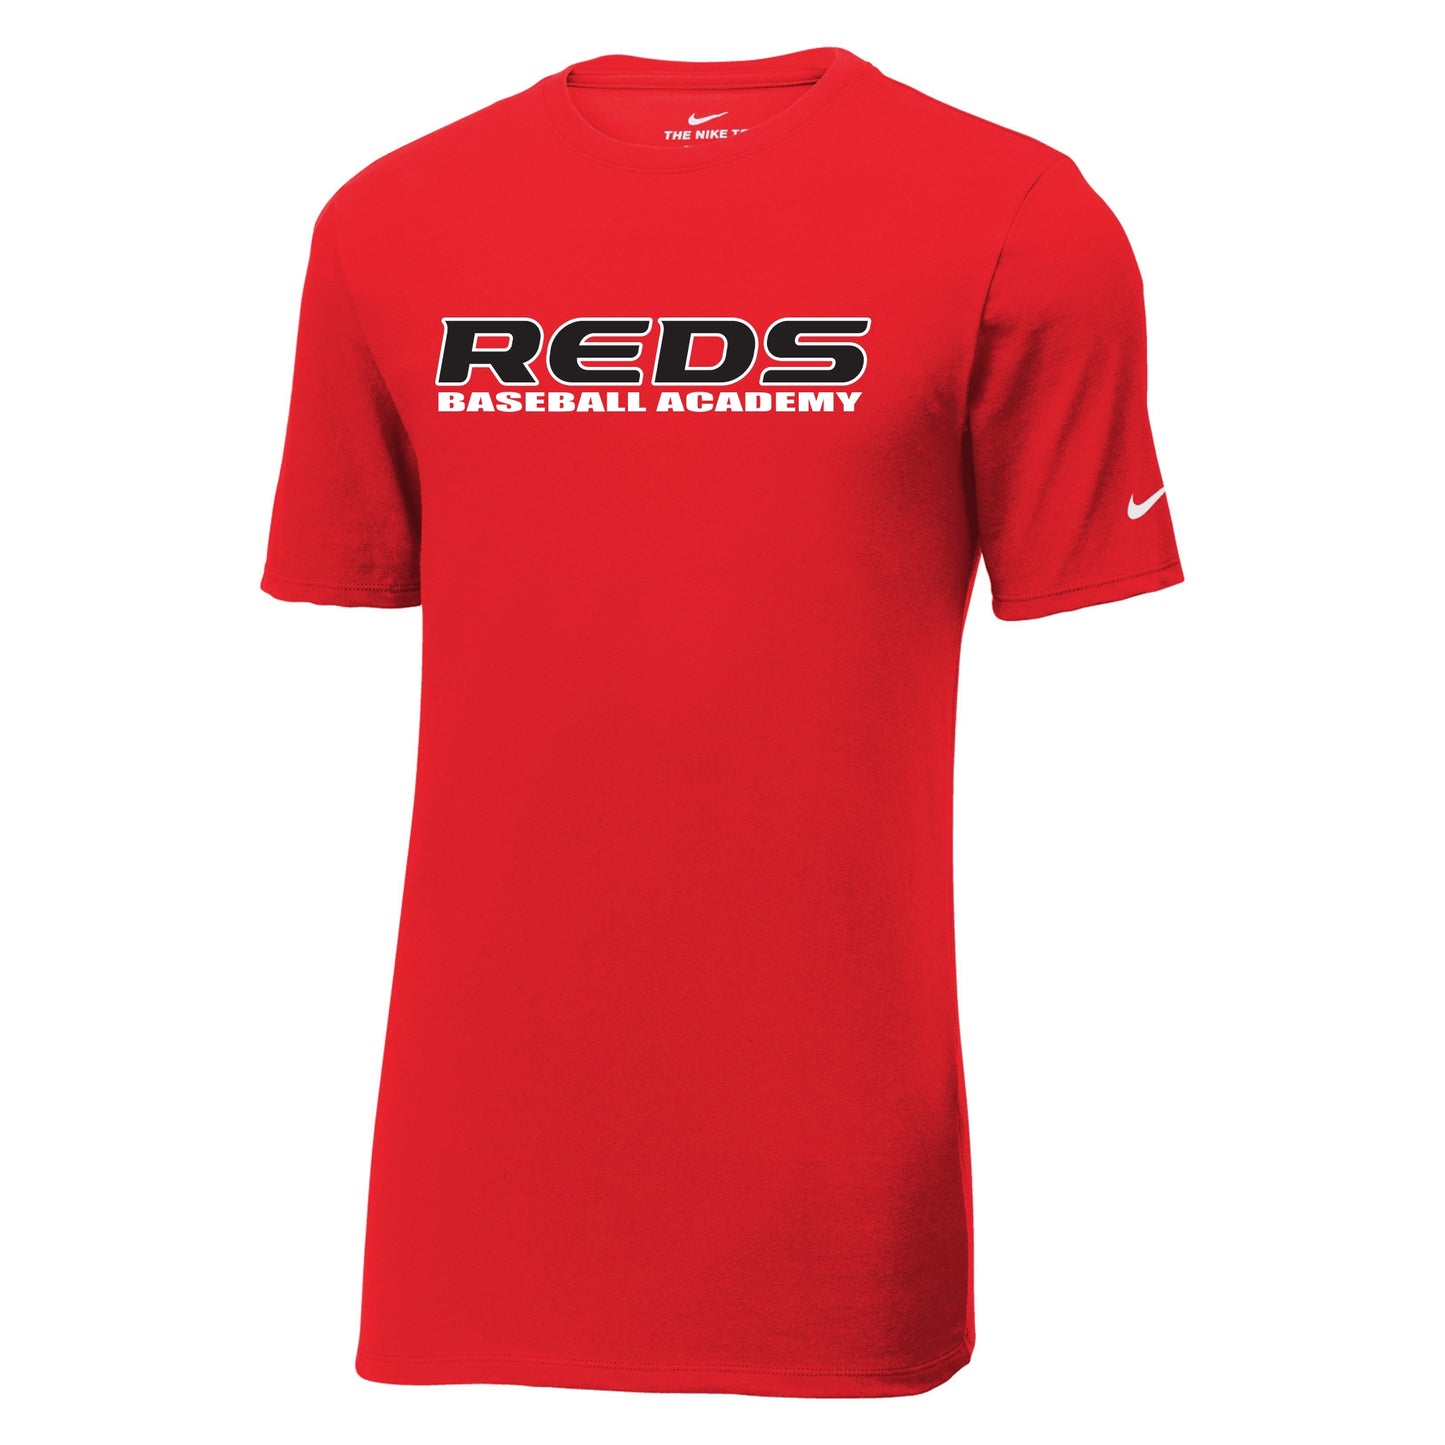 Reds Baseball Academy Nike Men's Cotton/Poly Tee